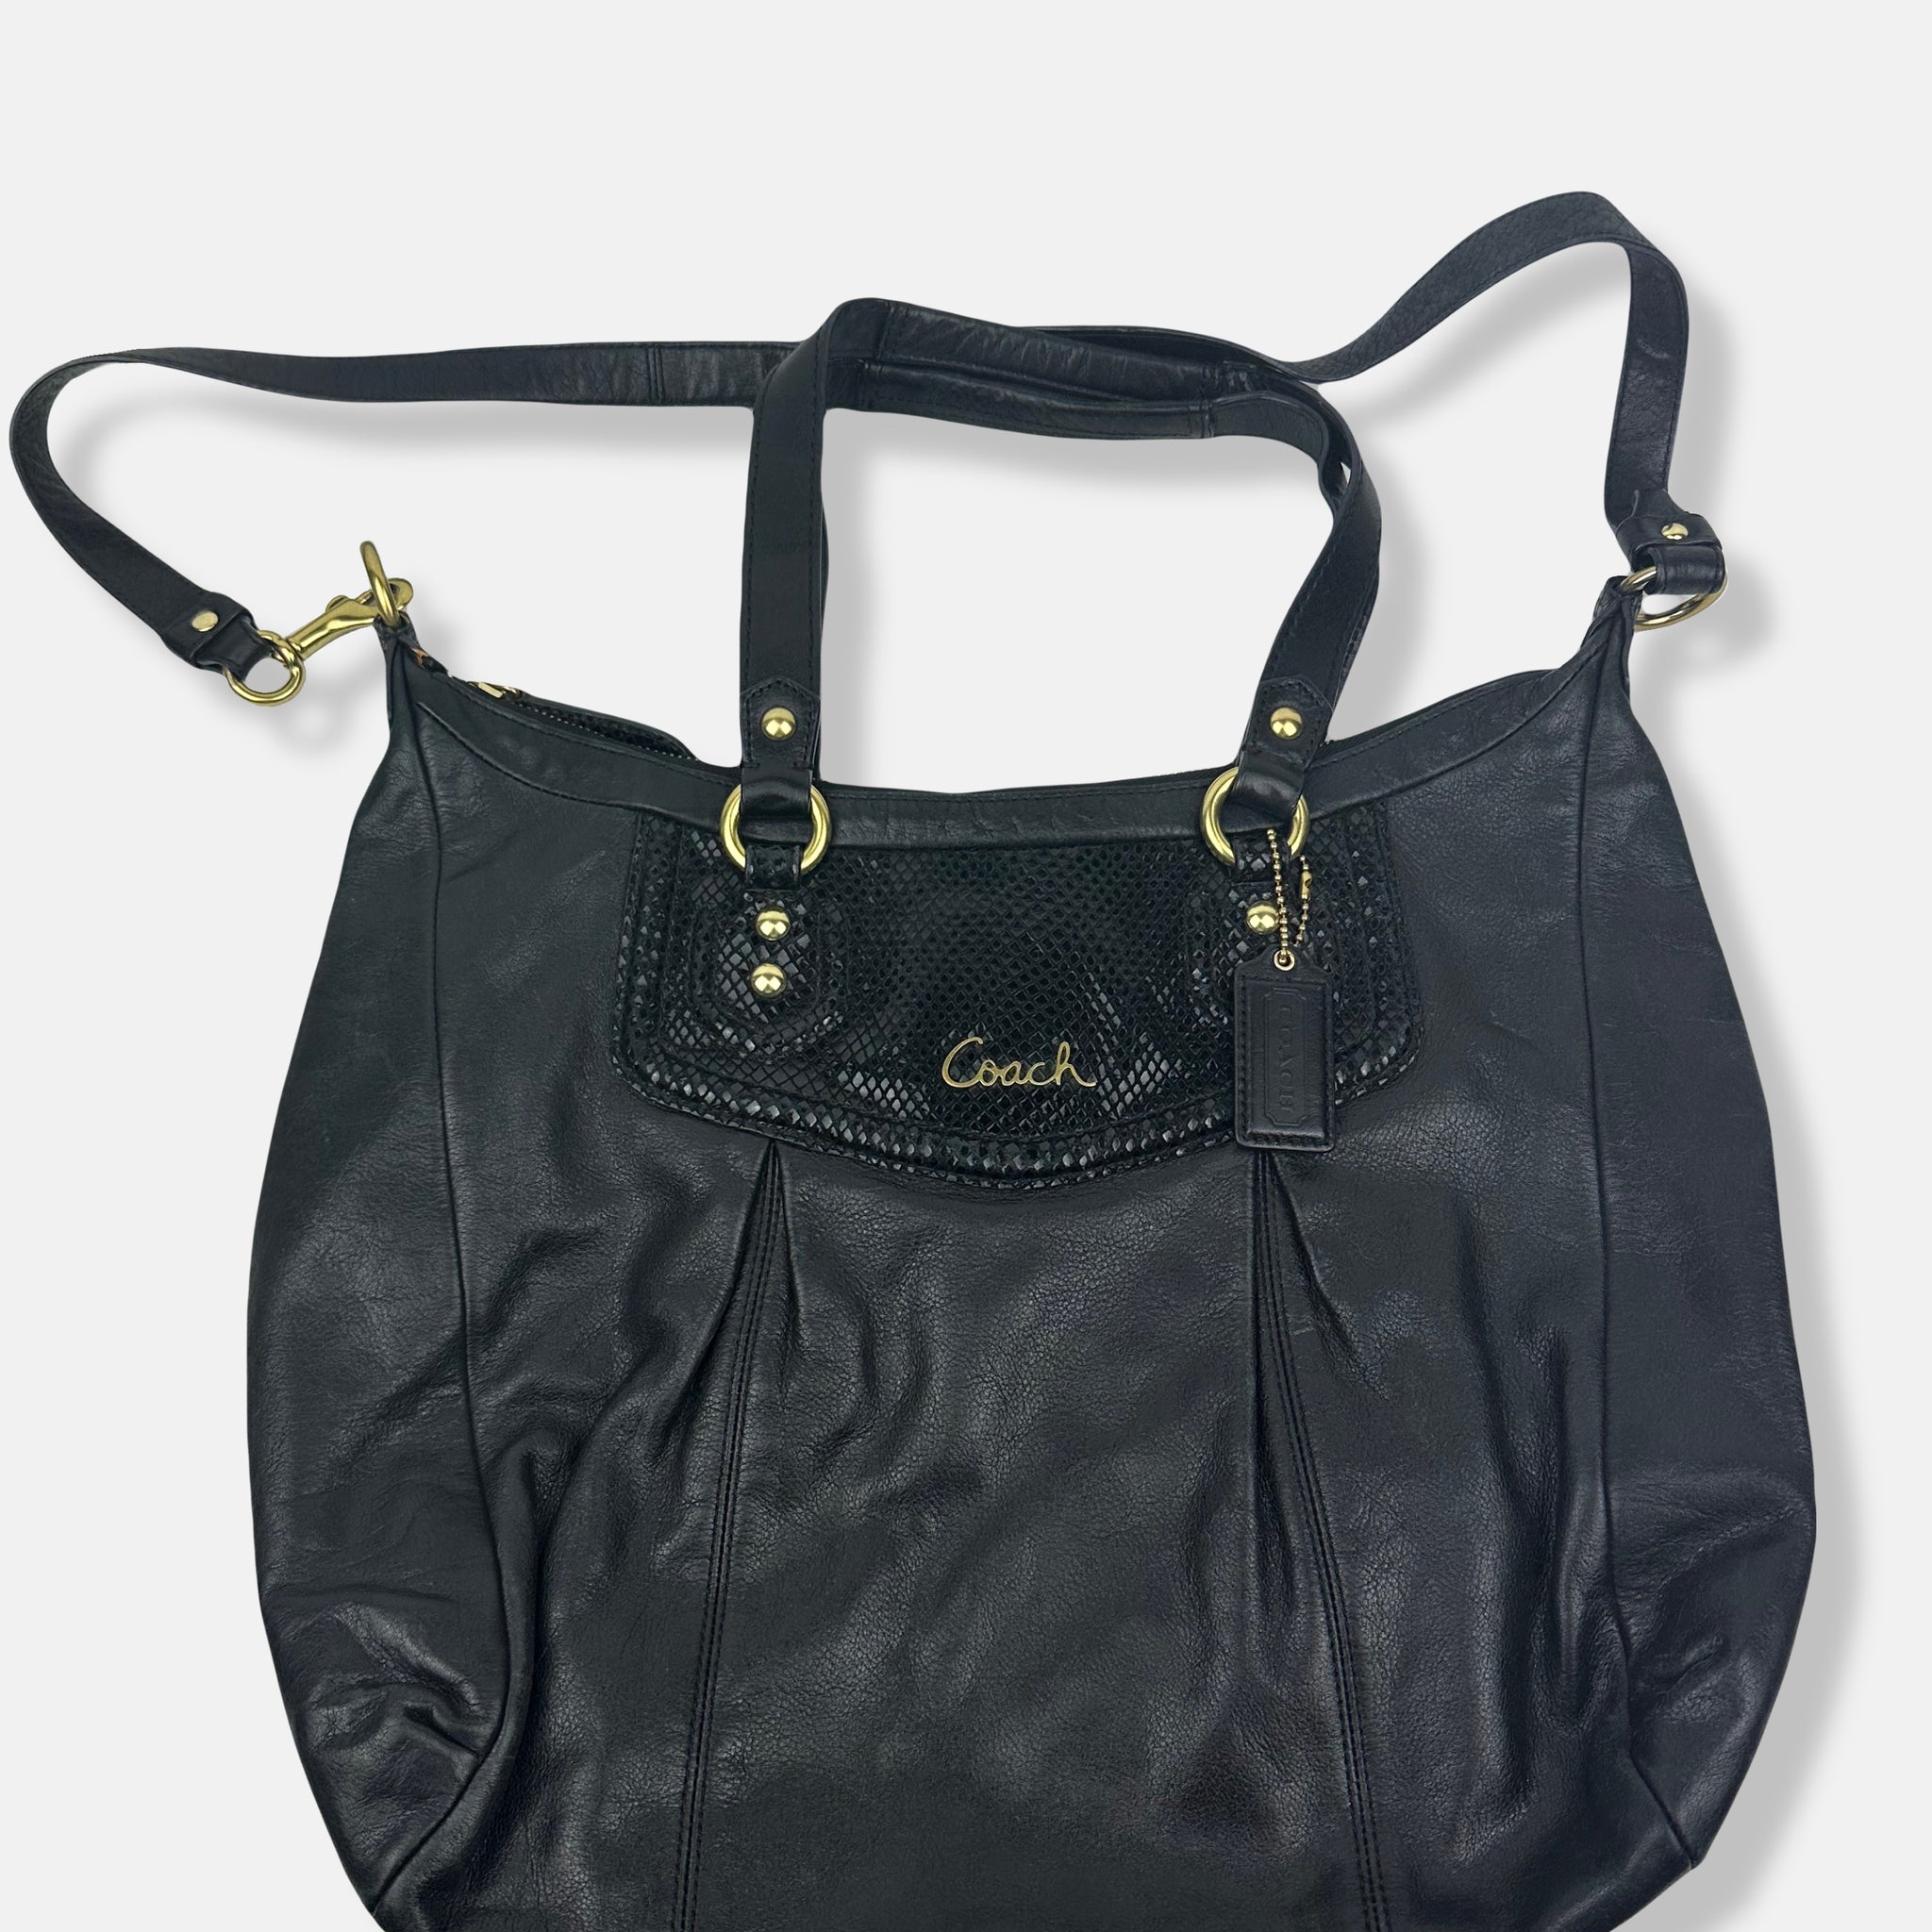 Ashley Black Leather Tote Bag